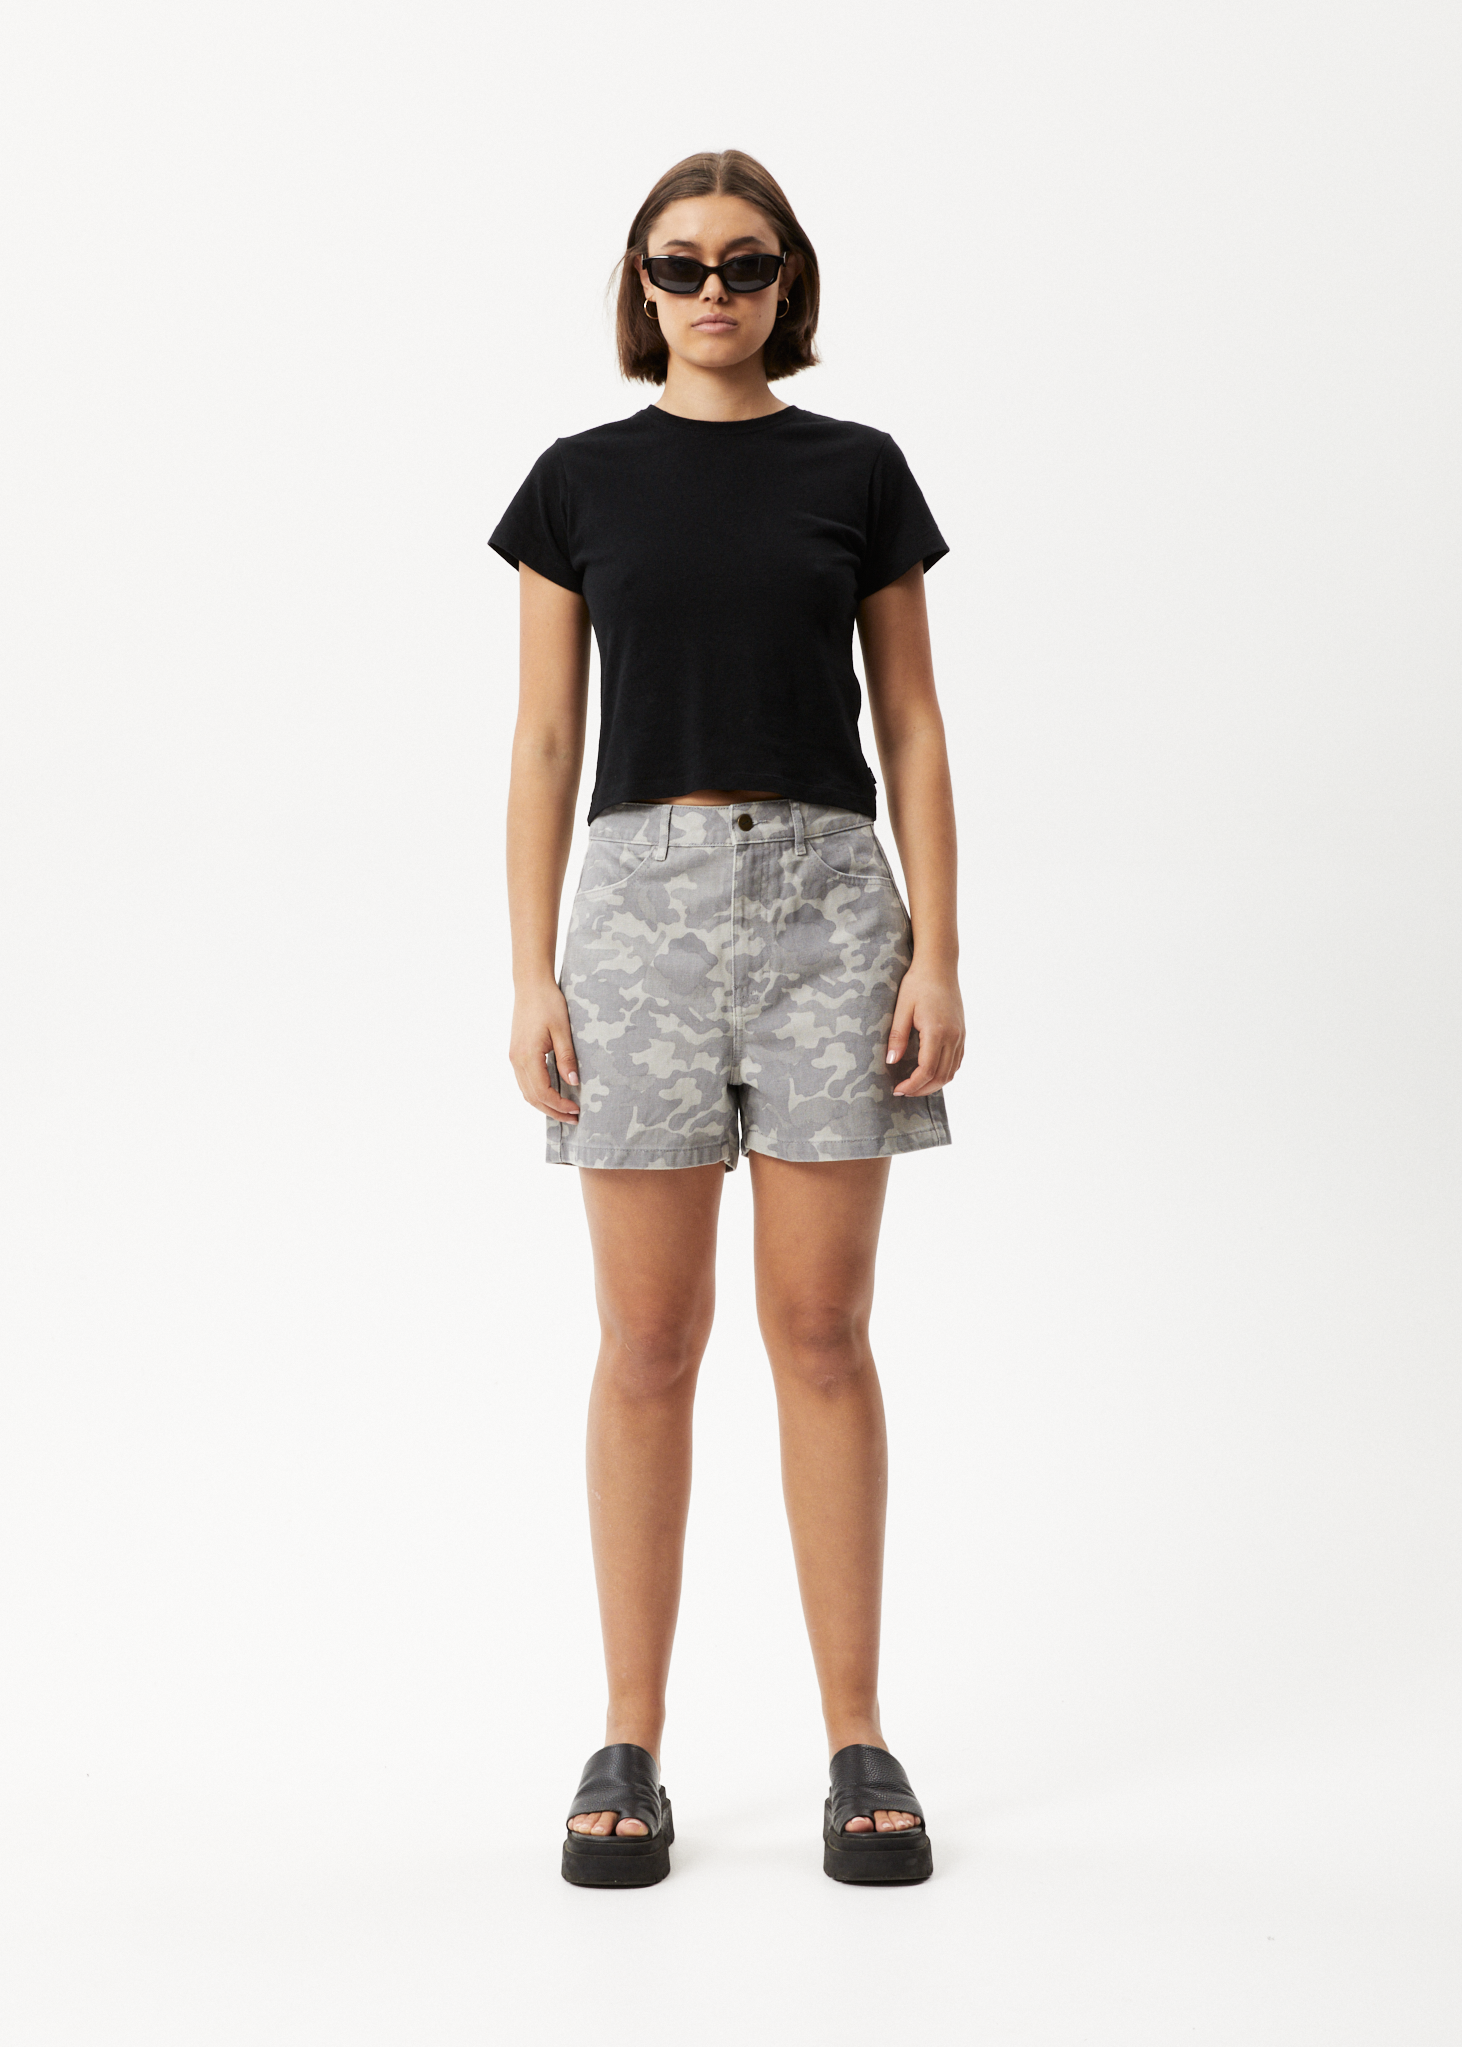 Women's Shorts | Sustainable Clothing at